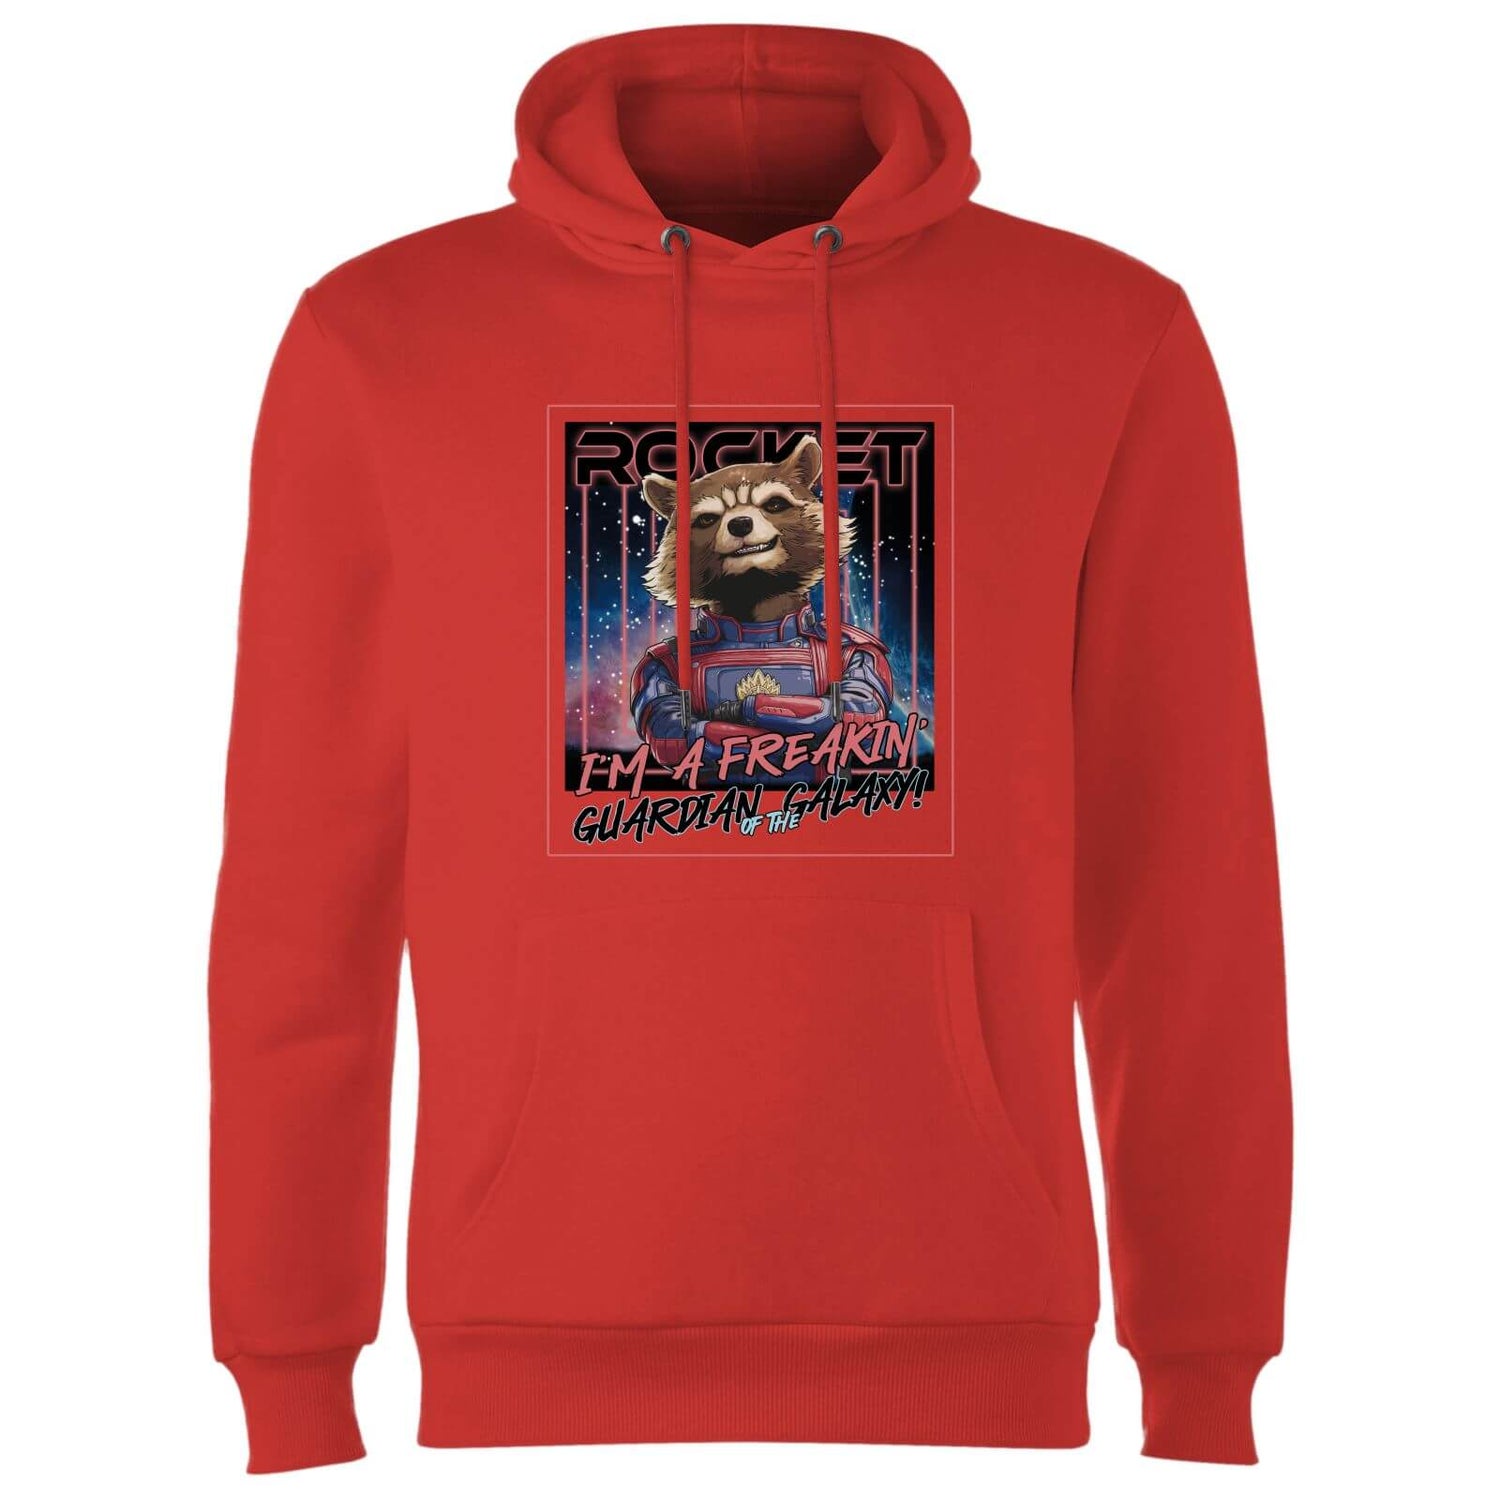 Guardians of the Galaxy Glowing Rocket Raccoon Hoodie - Red